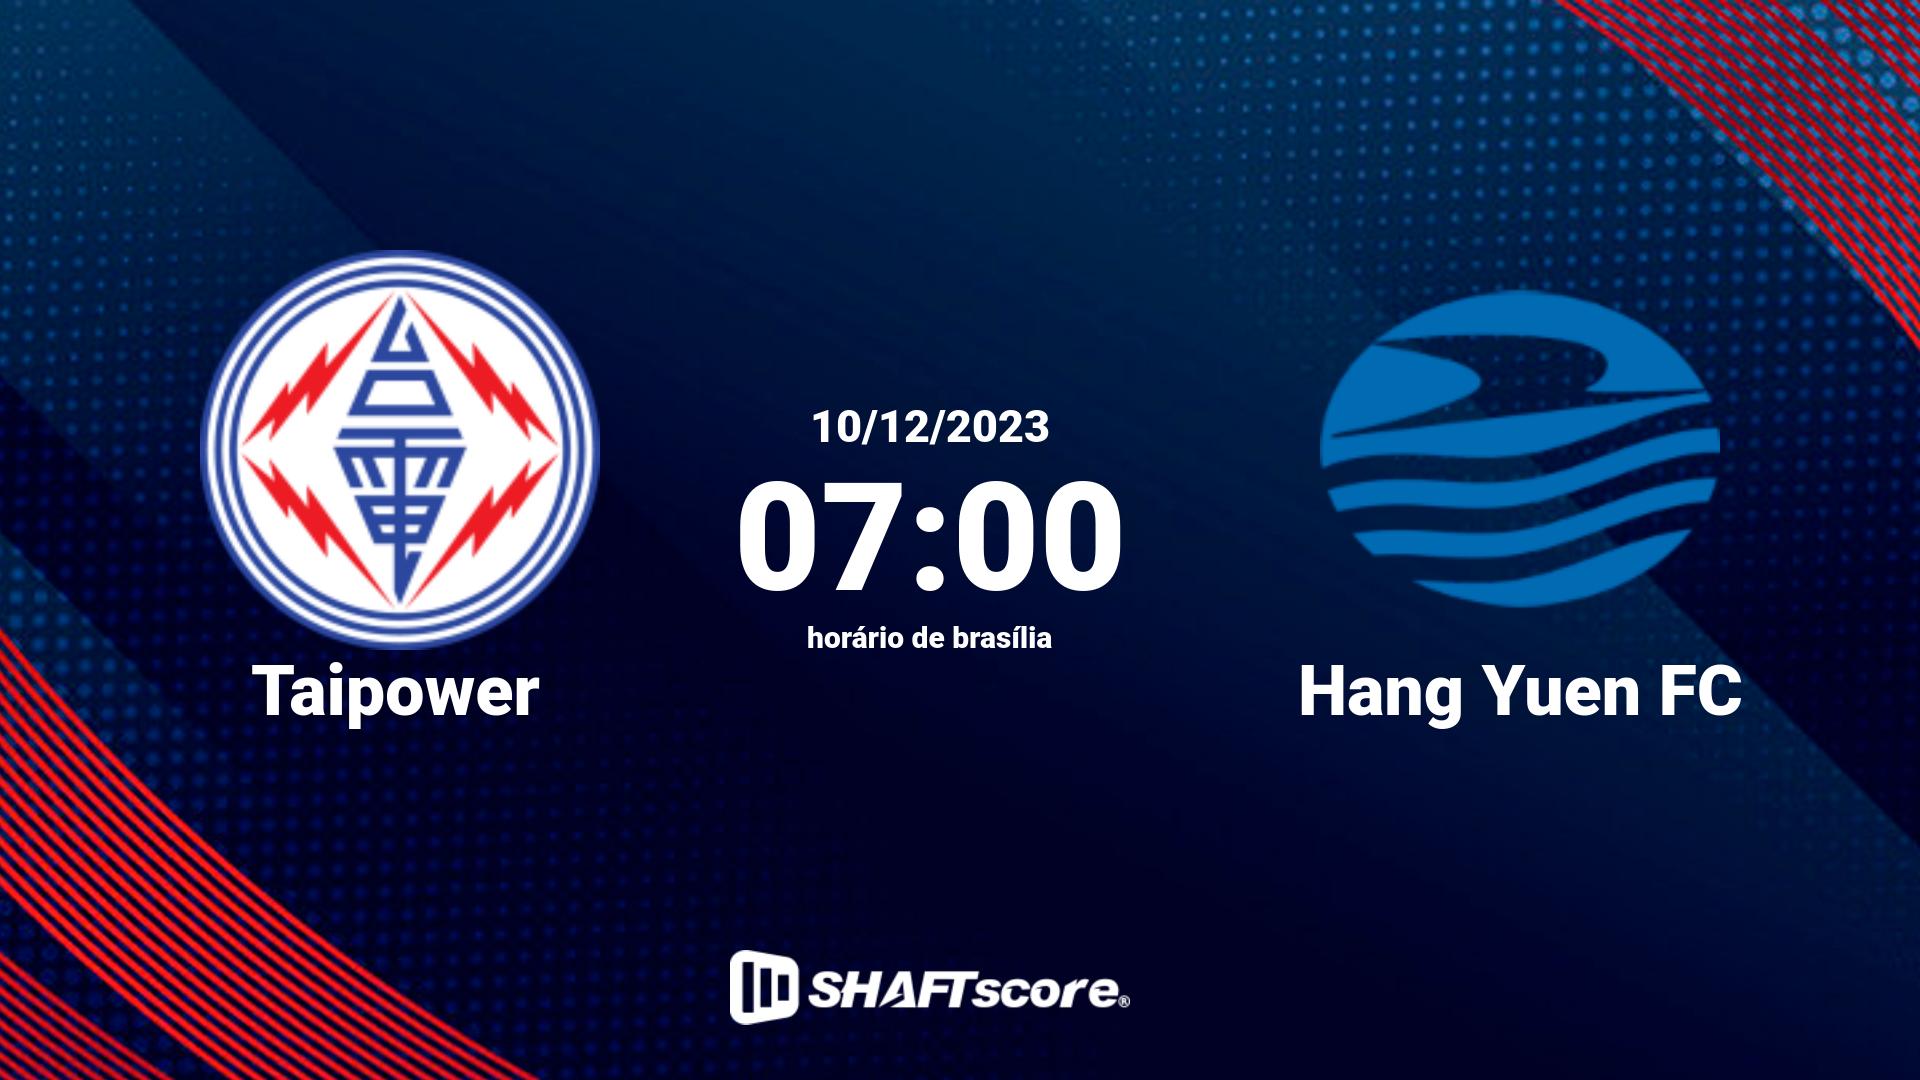 Estatísticas do jogo Taipower vs Hang Yuen FC 10.12 07:00